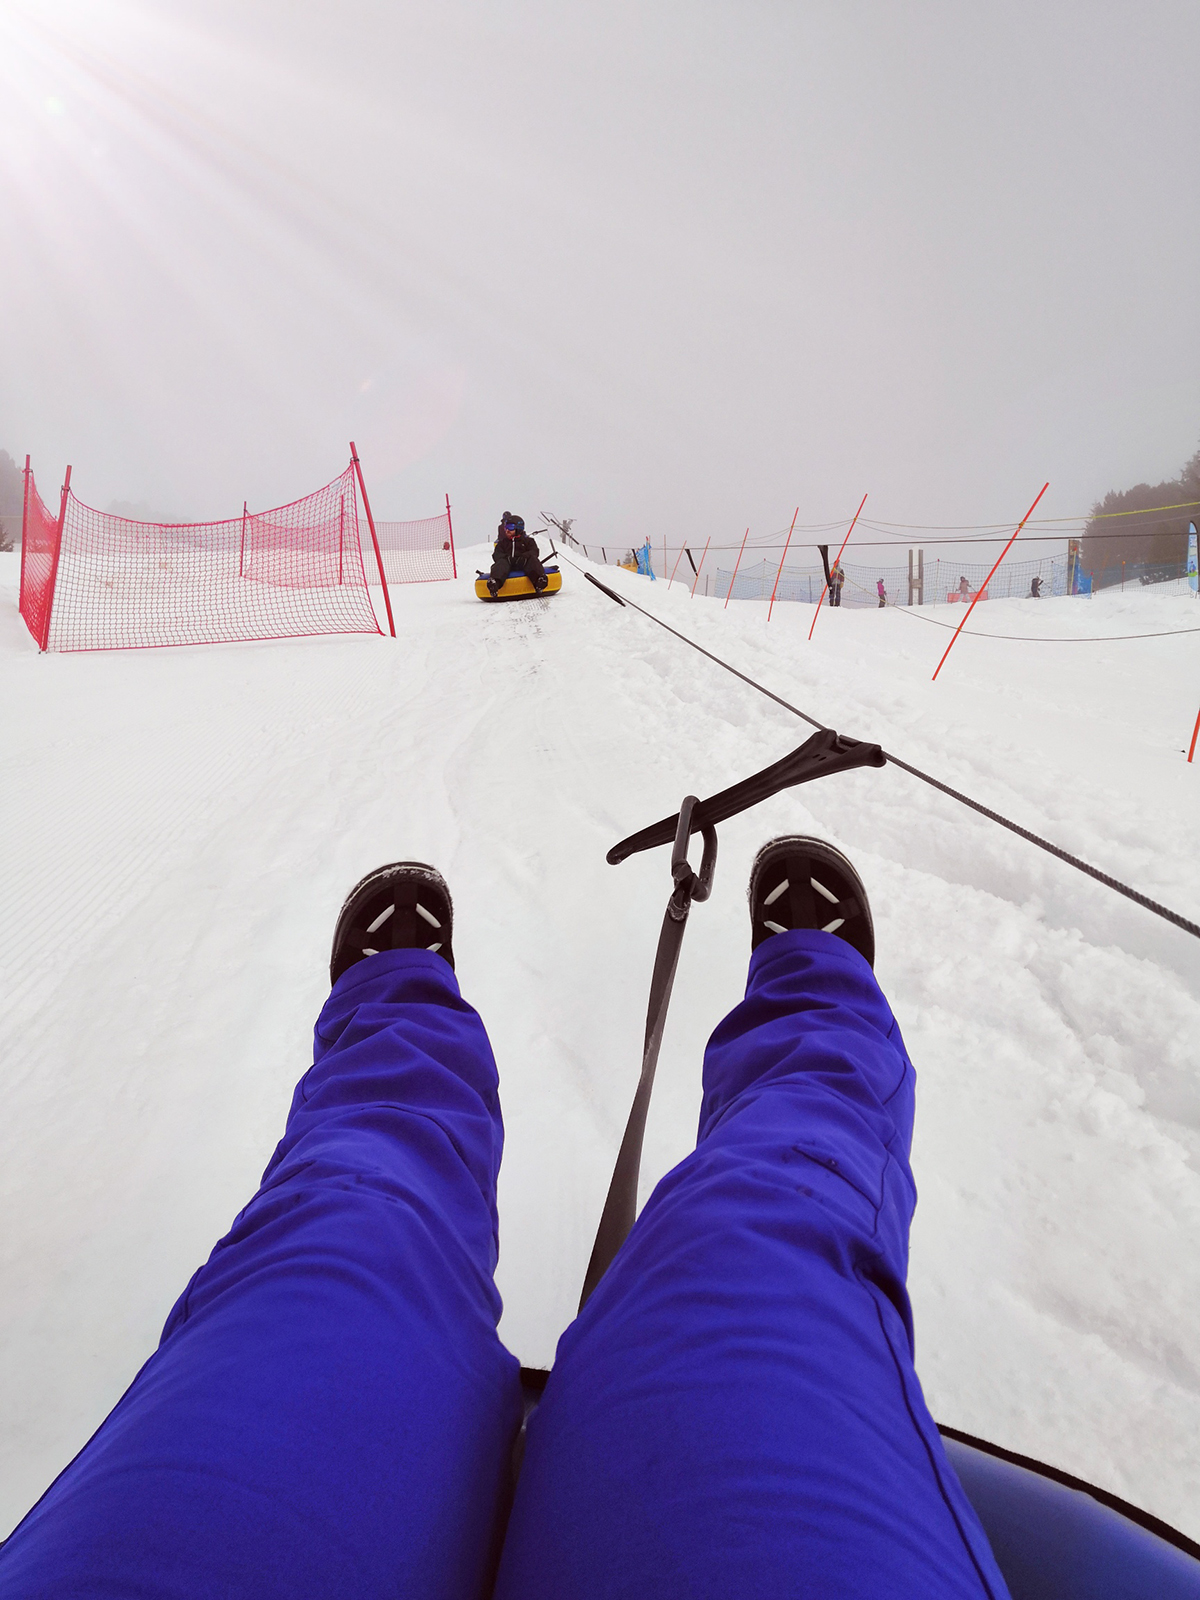 Chamrousse blog experience snowtubing tube park mountain ski resort isere french alps france - © EM - OT Chamrousse